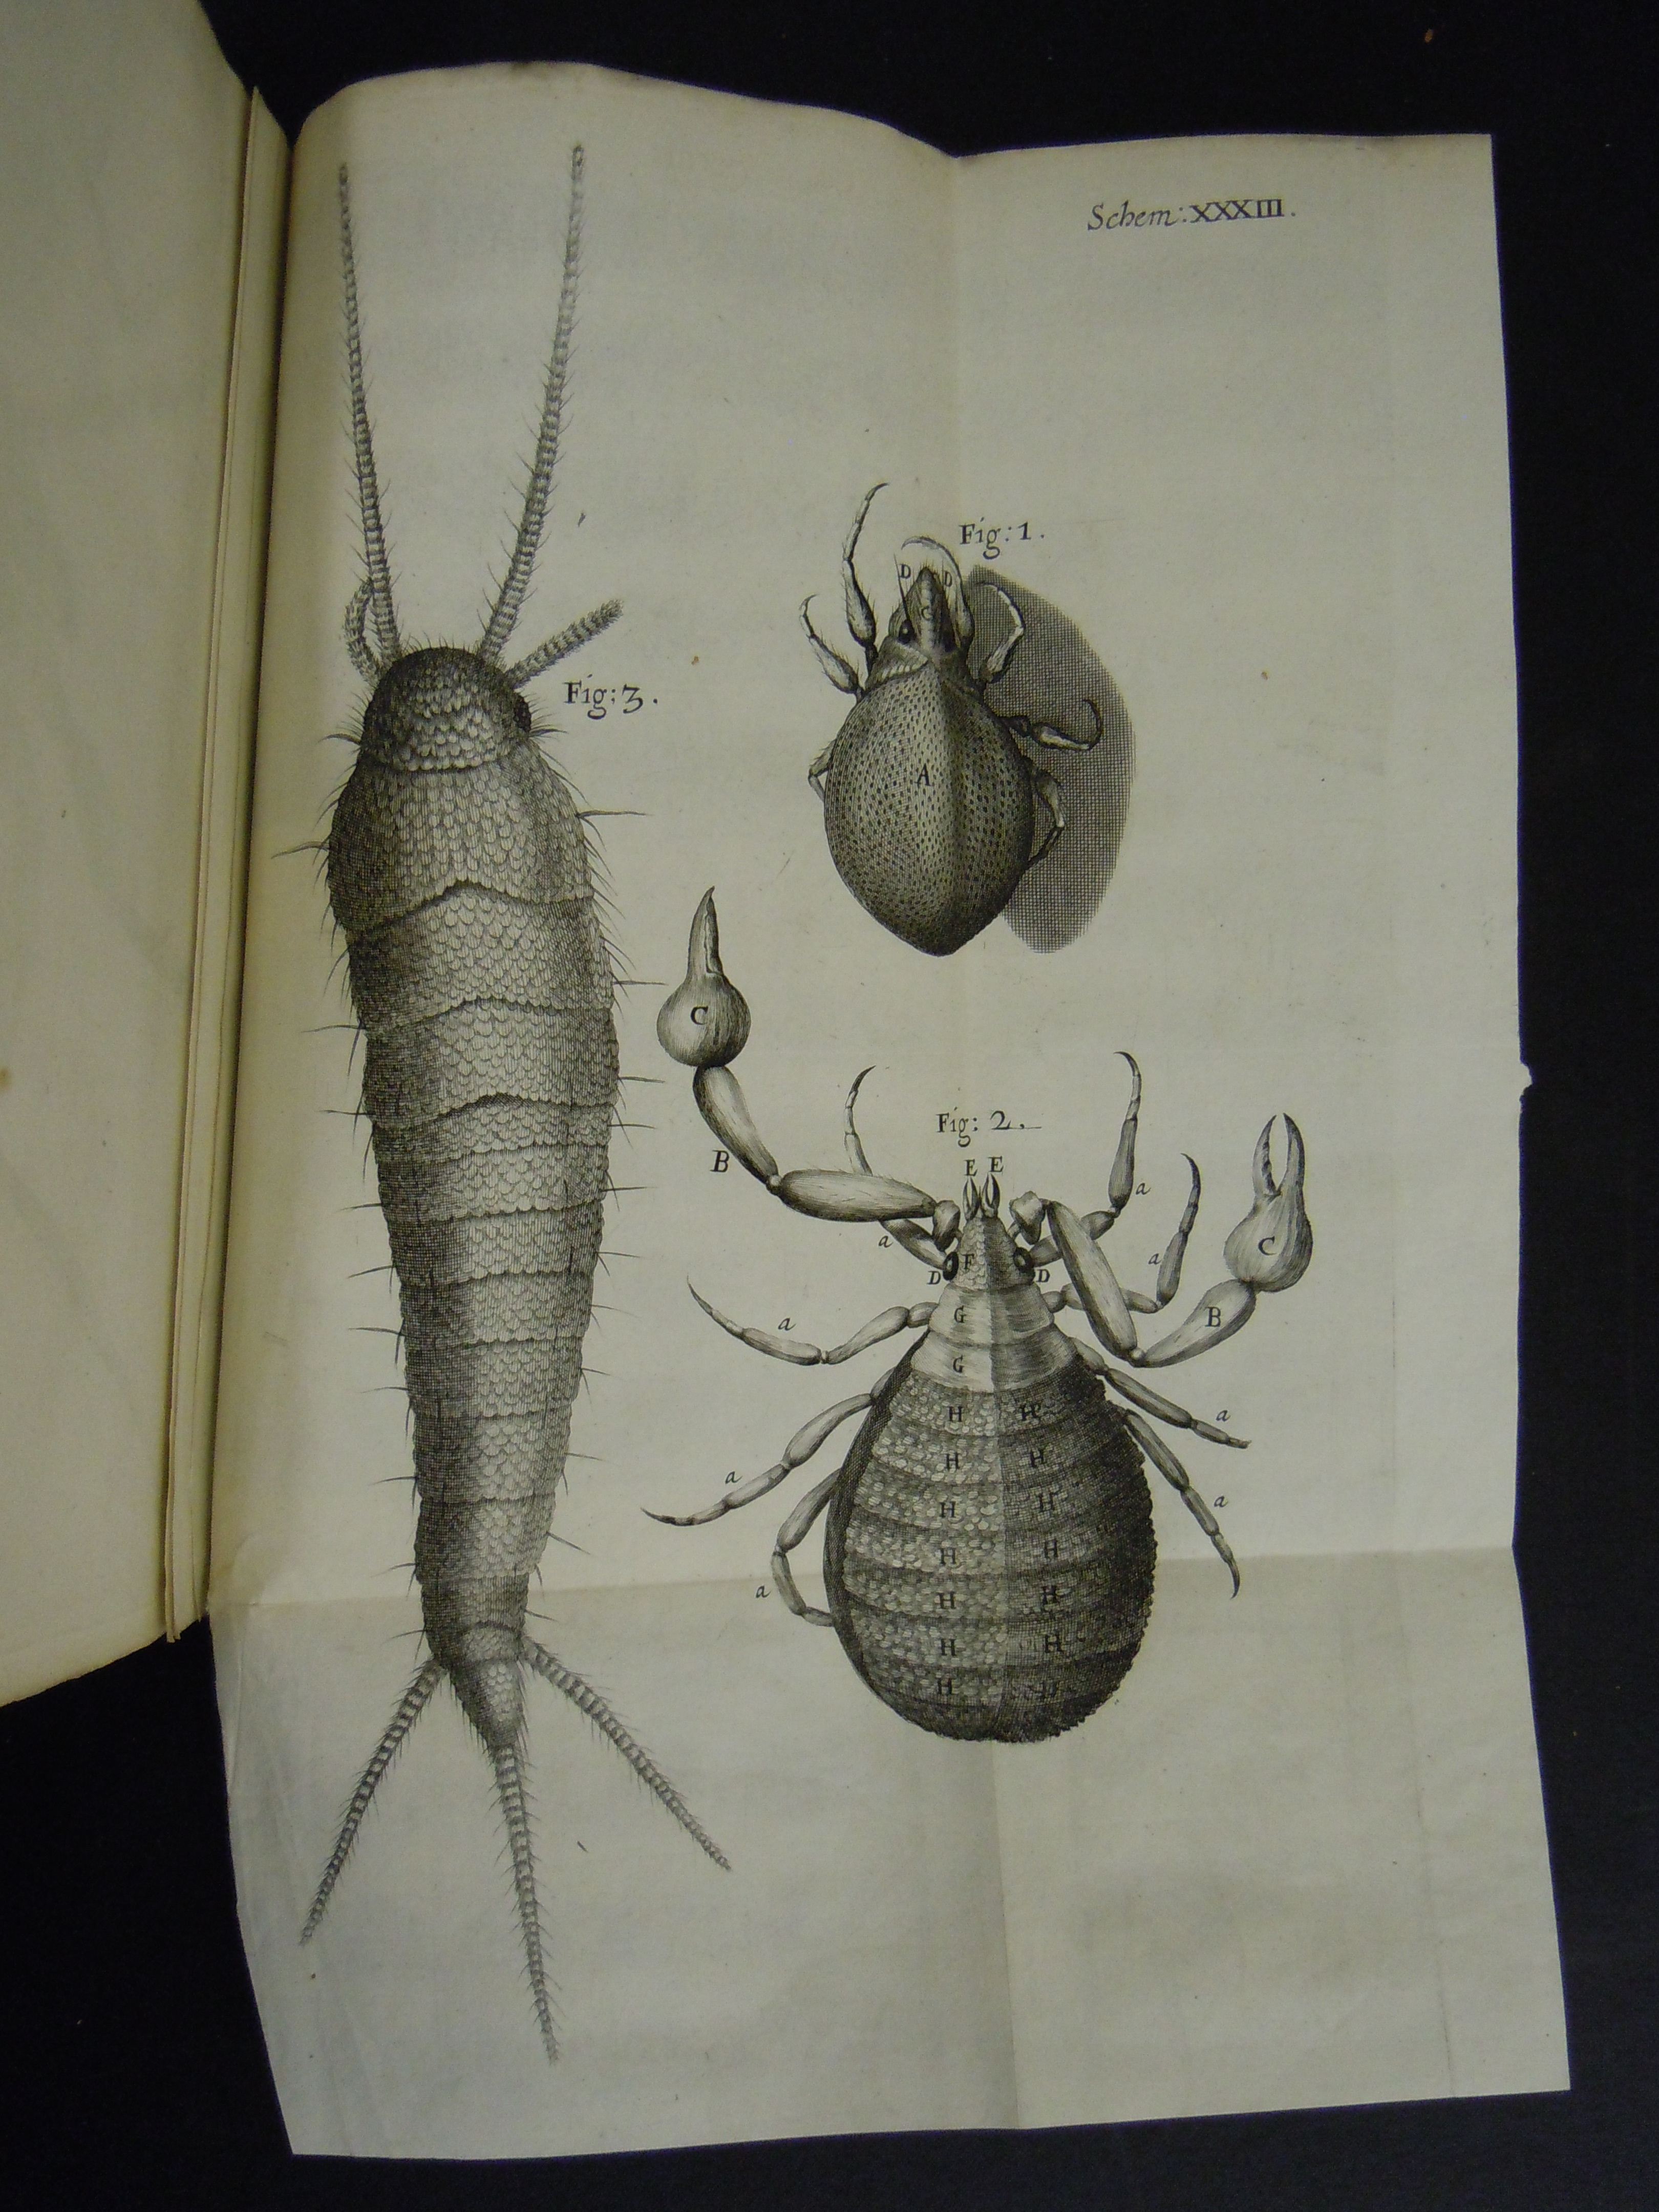 BT1.31.14, pl. xxxiii, Robert Hooke’s Micrographia (1665)